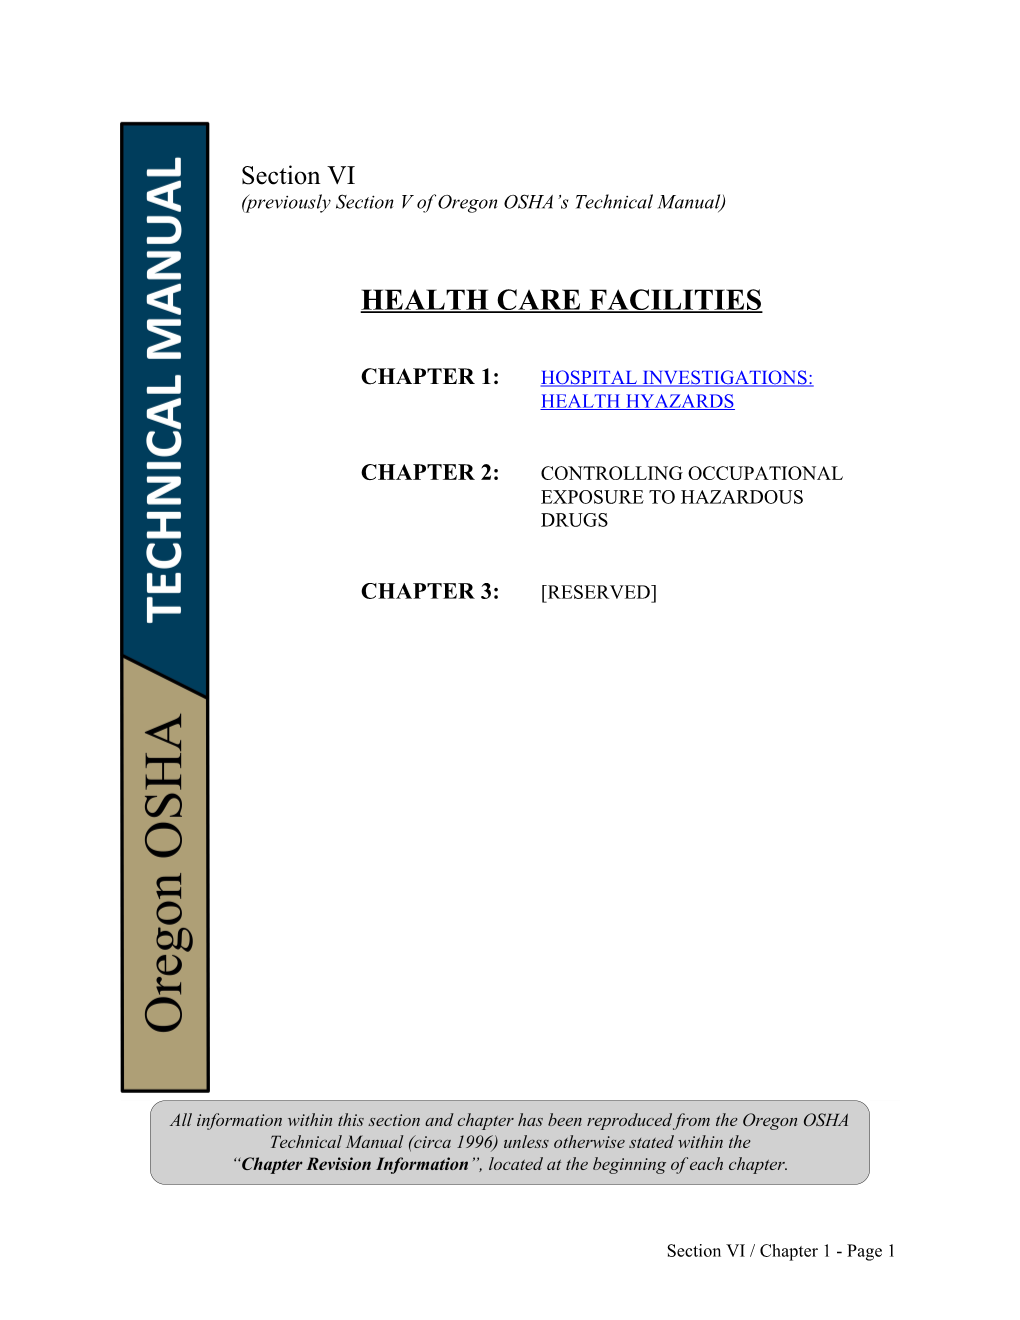 Technical Manual, Sec. 6, Ch. 1: Hospital Investigations: Health Hazards